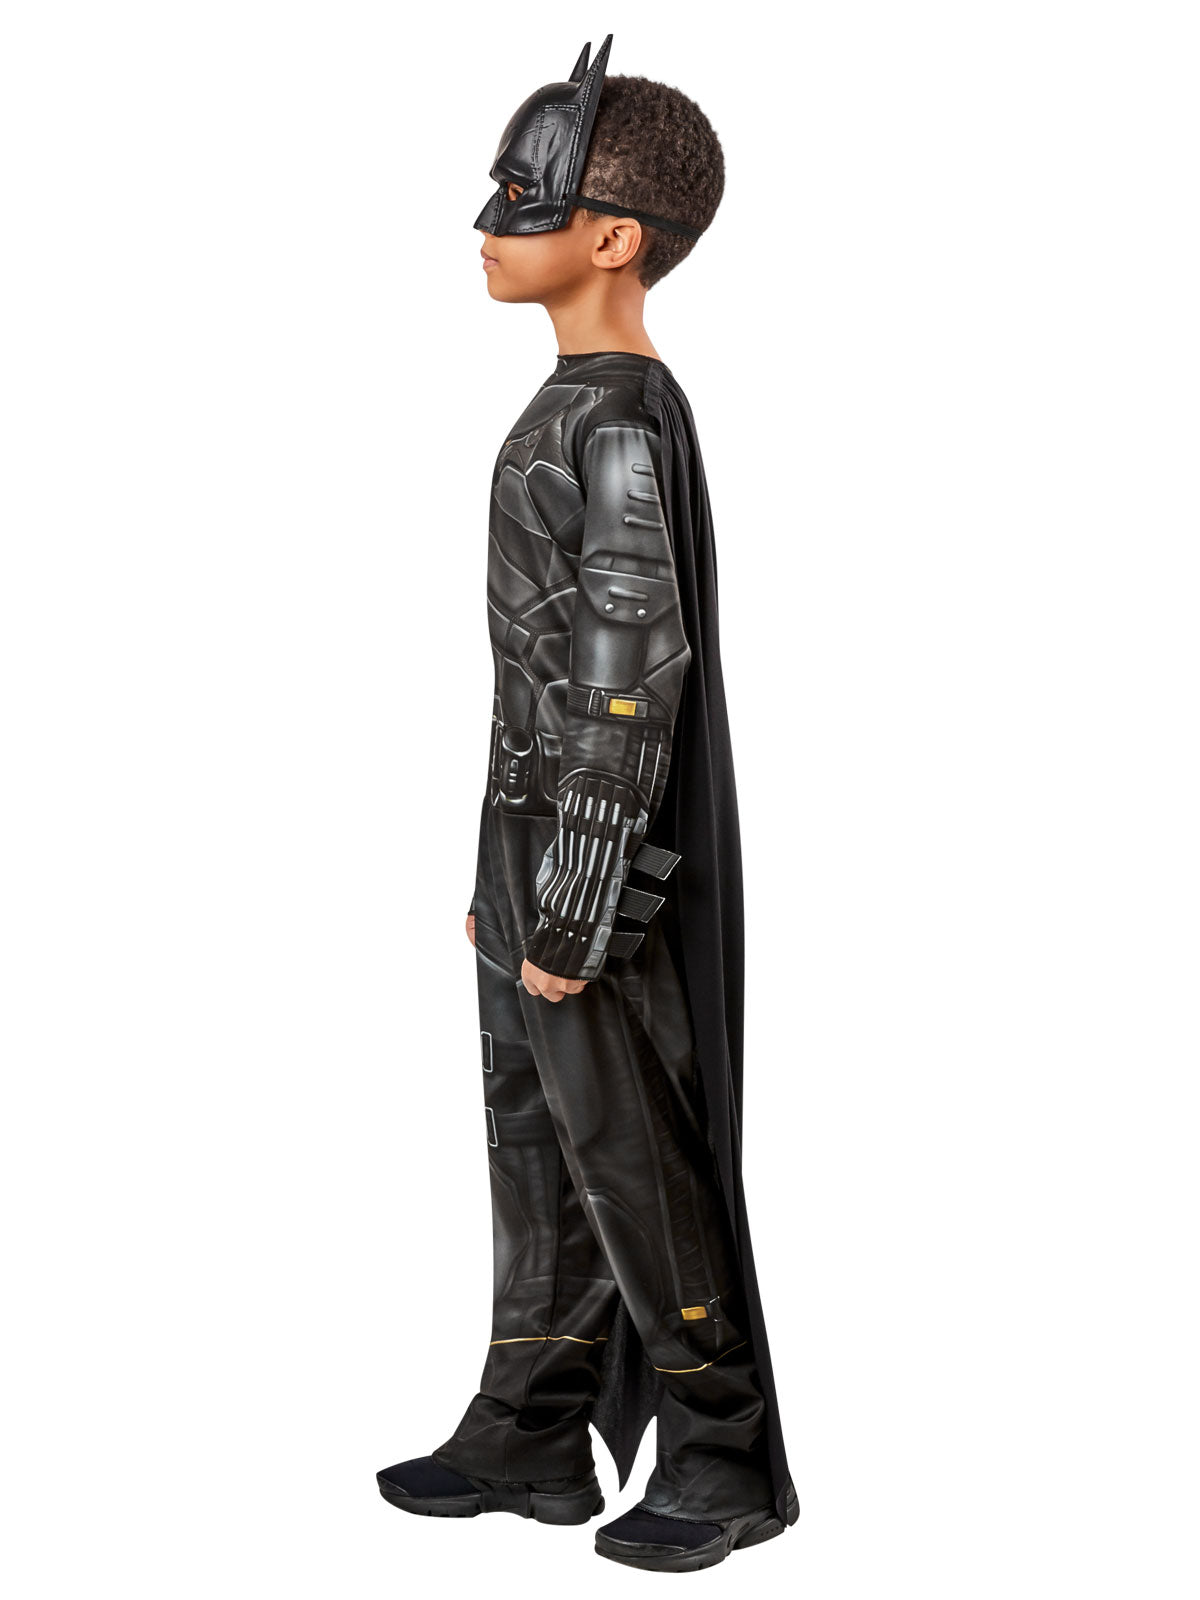 Batman Child Costume "the Batman" Classic Costume